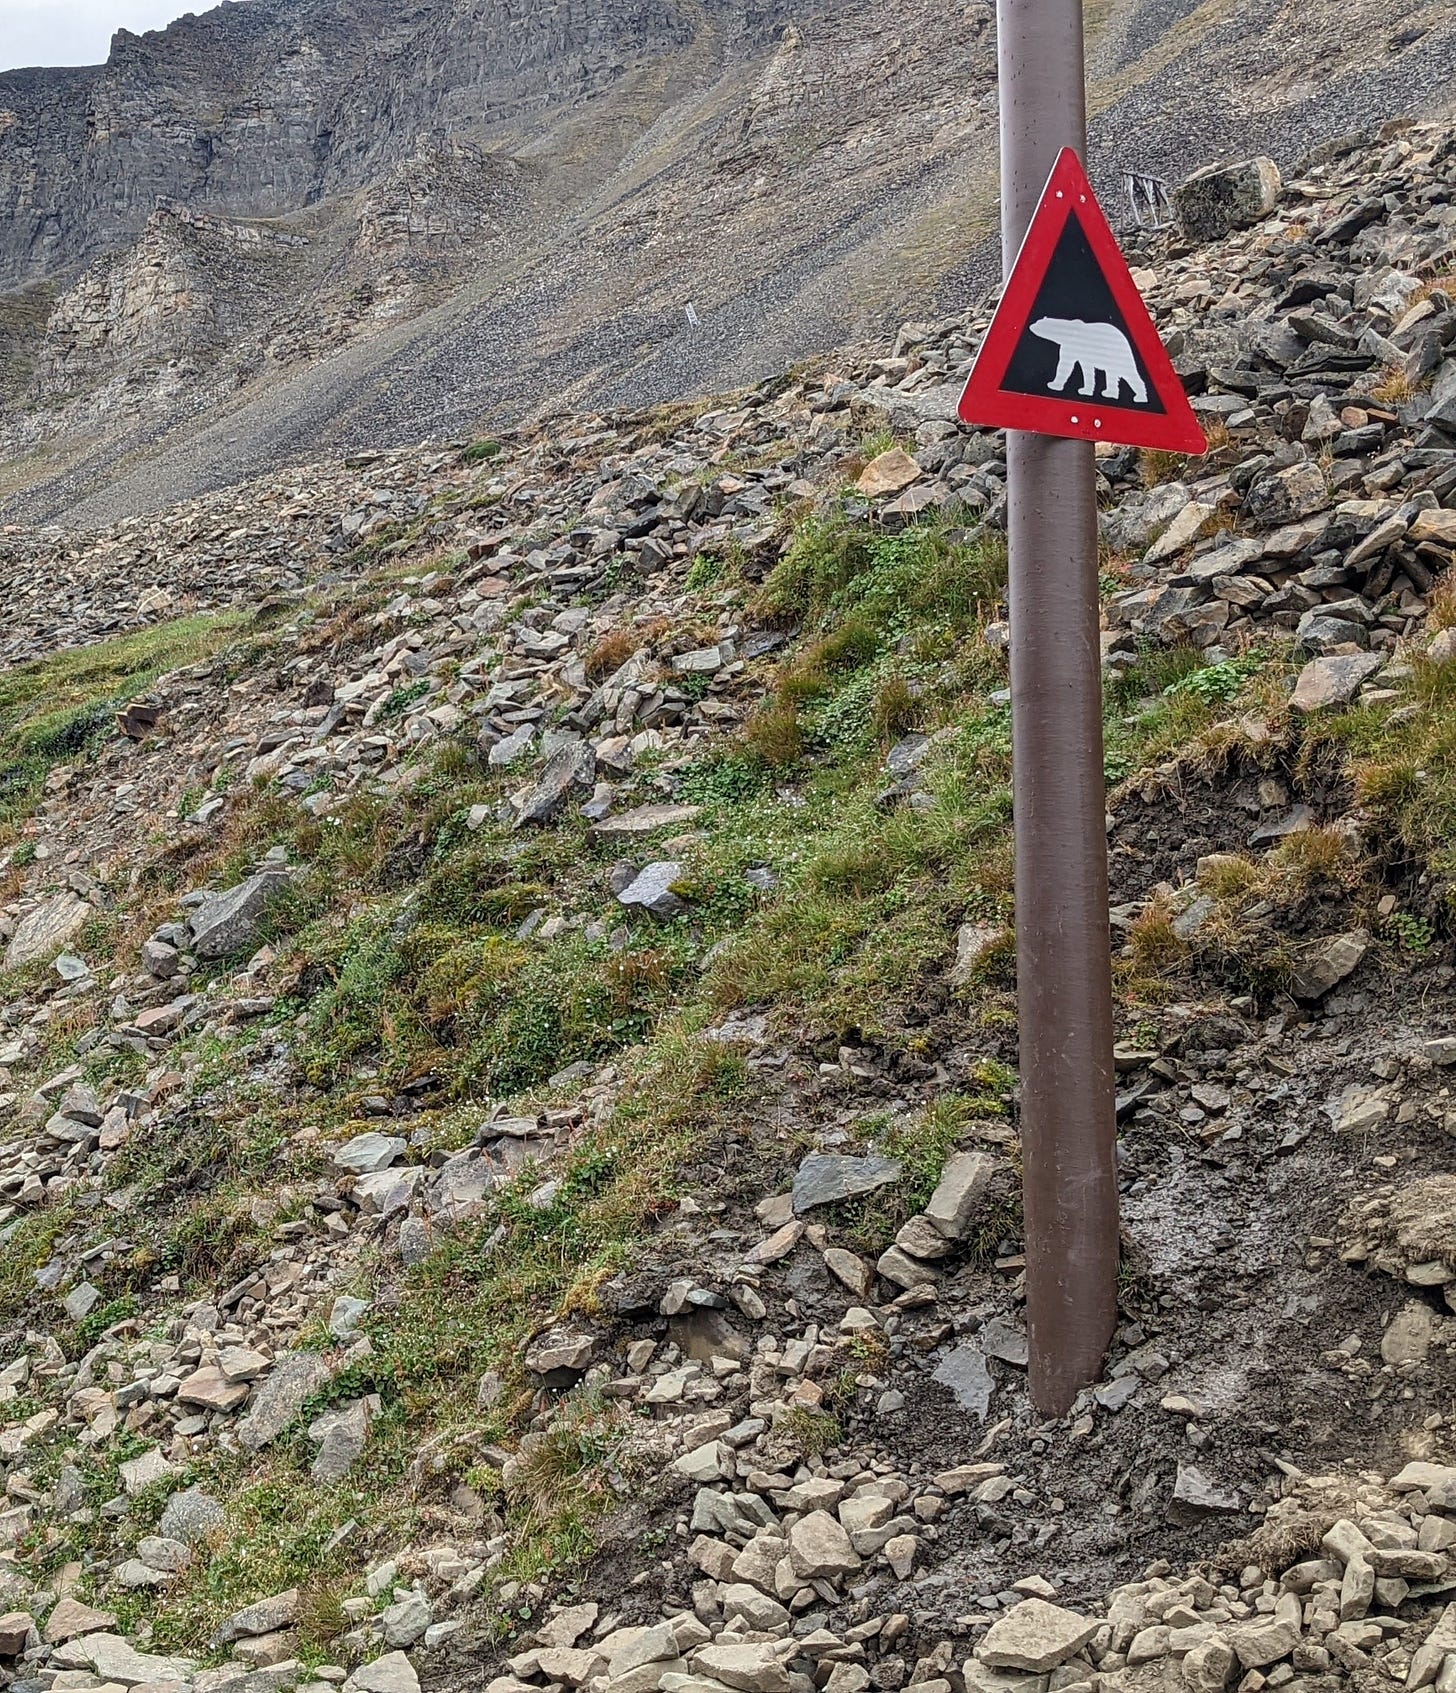 Polar bear warning sign in Longyearbyen.